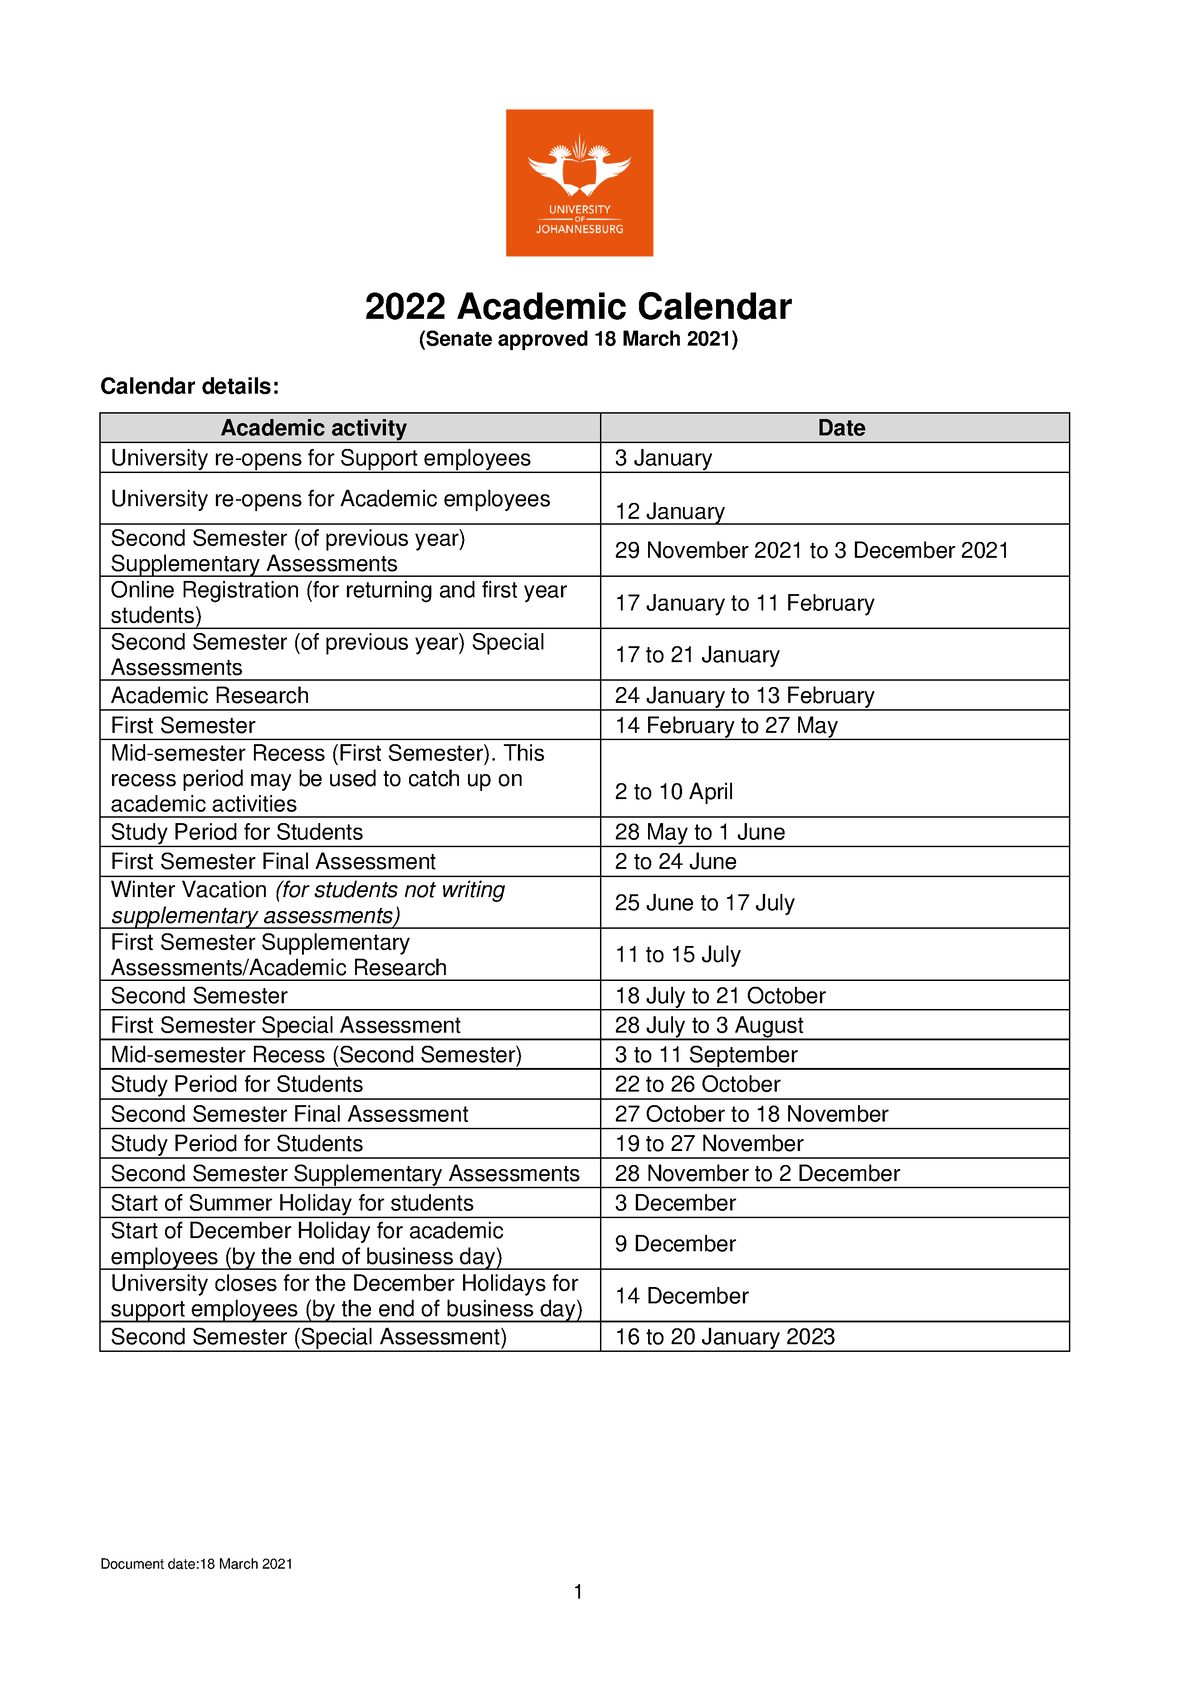 Academic calendar for 2022 - 1 2022 Academic Calendar (Senate approved ...